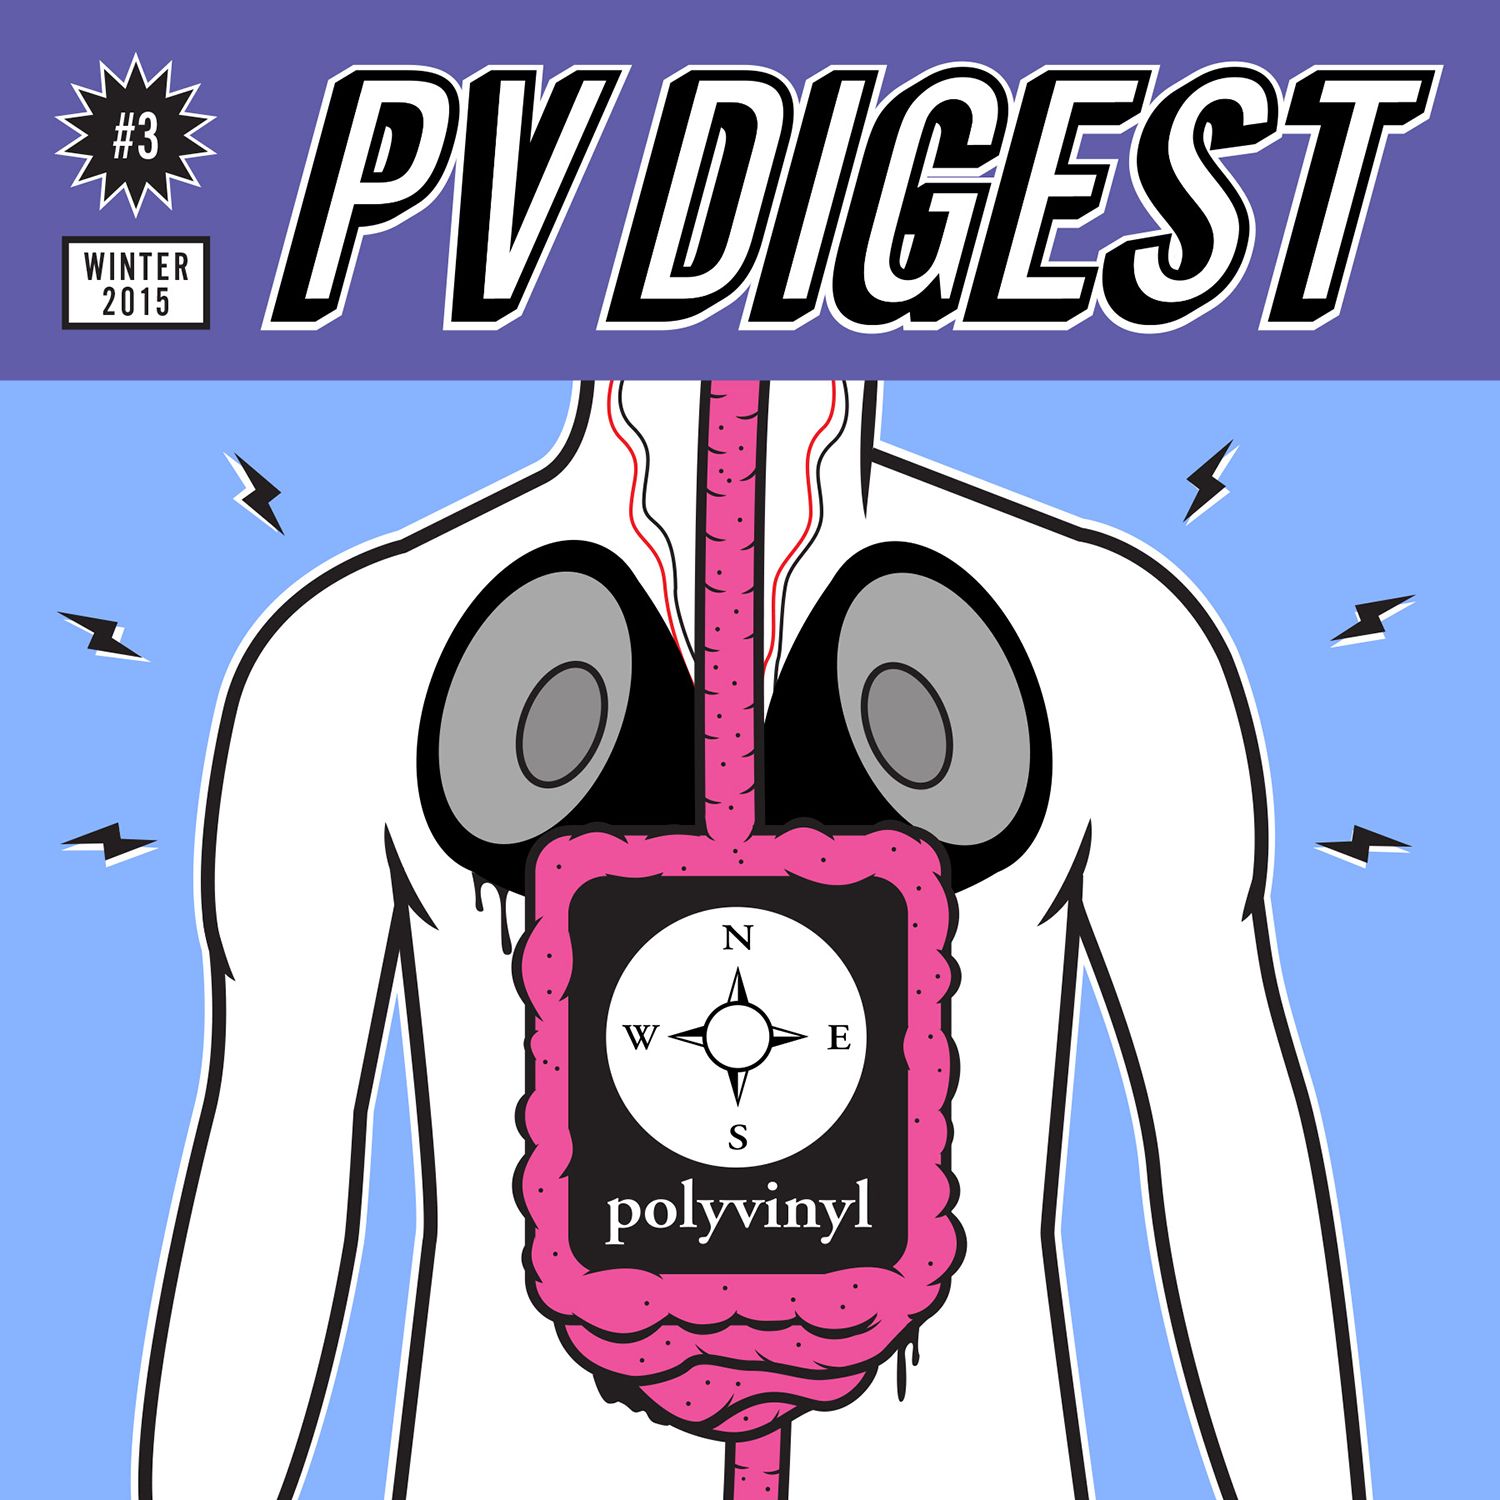 PV Digest #3